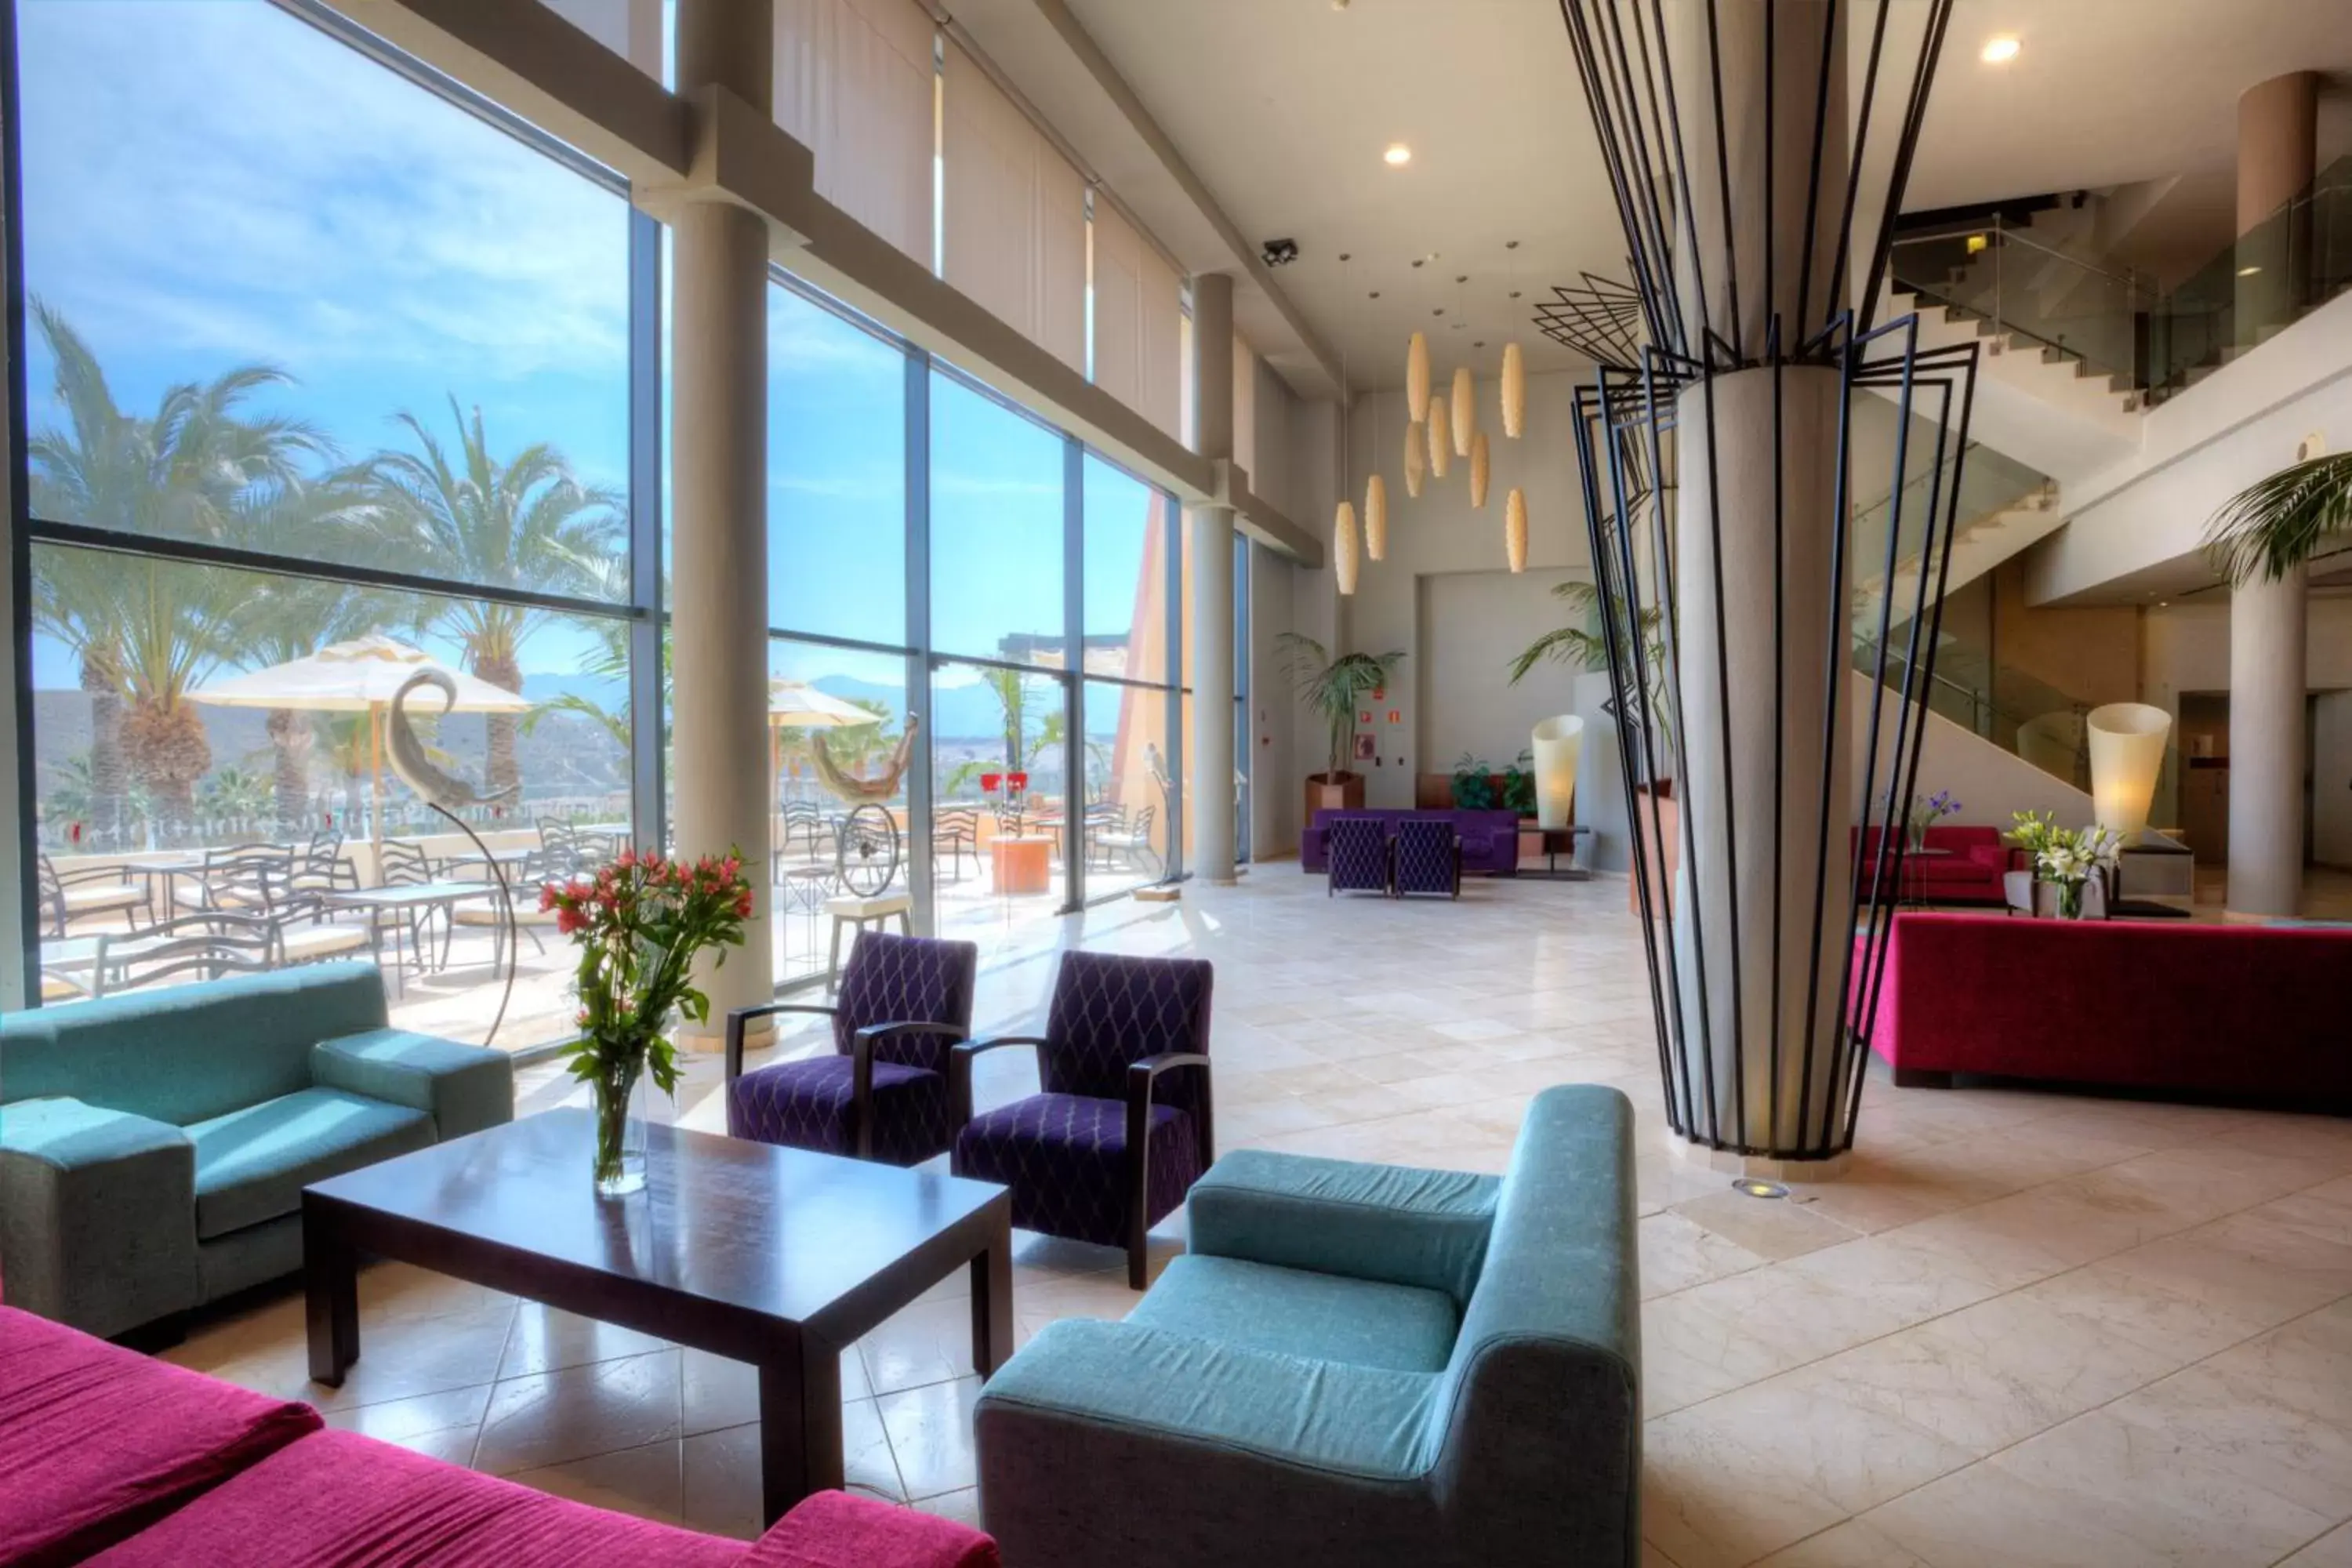 Lobby or reception in Valle Del Este Golf Resort